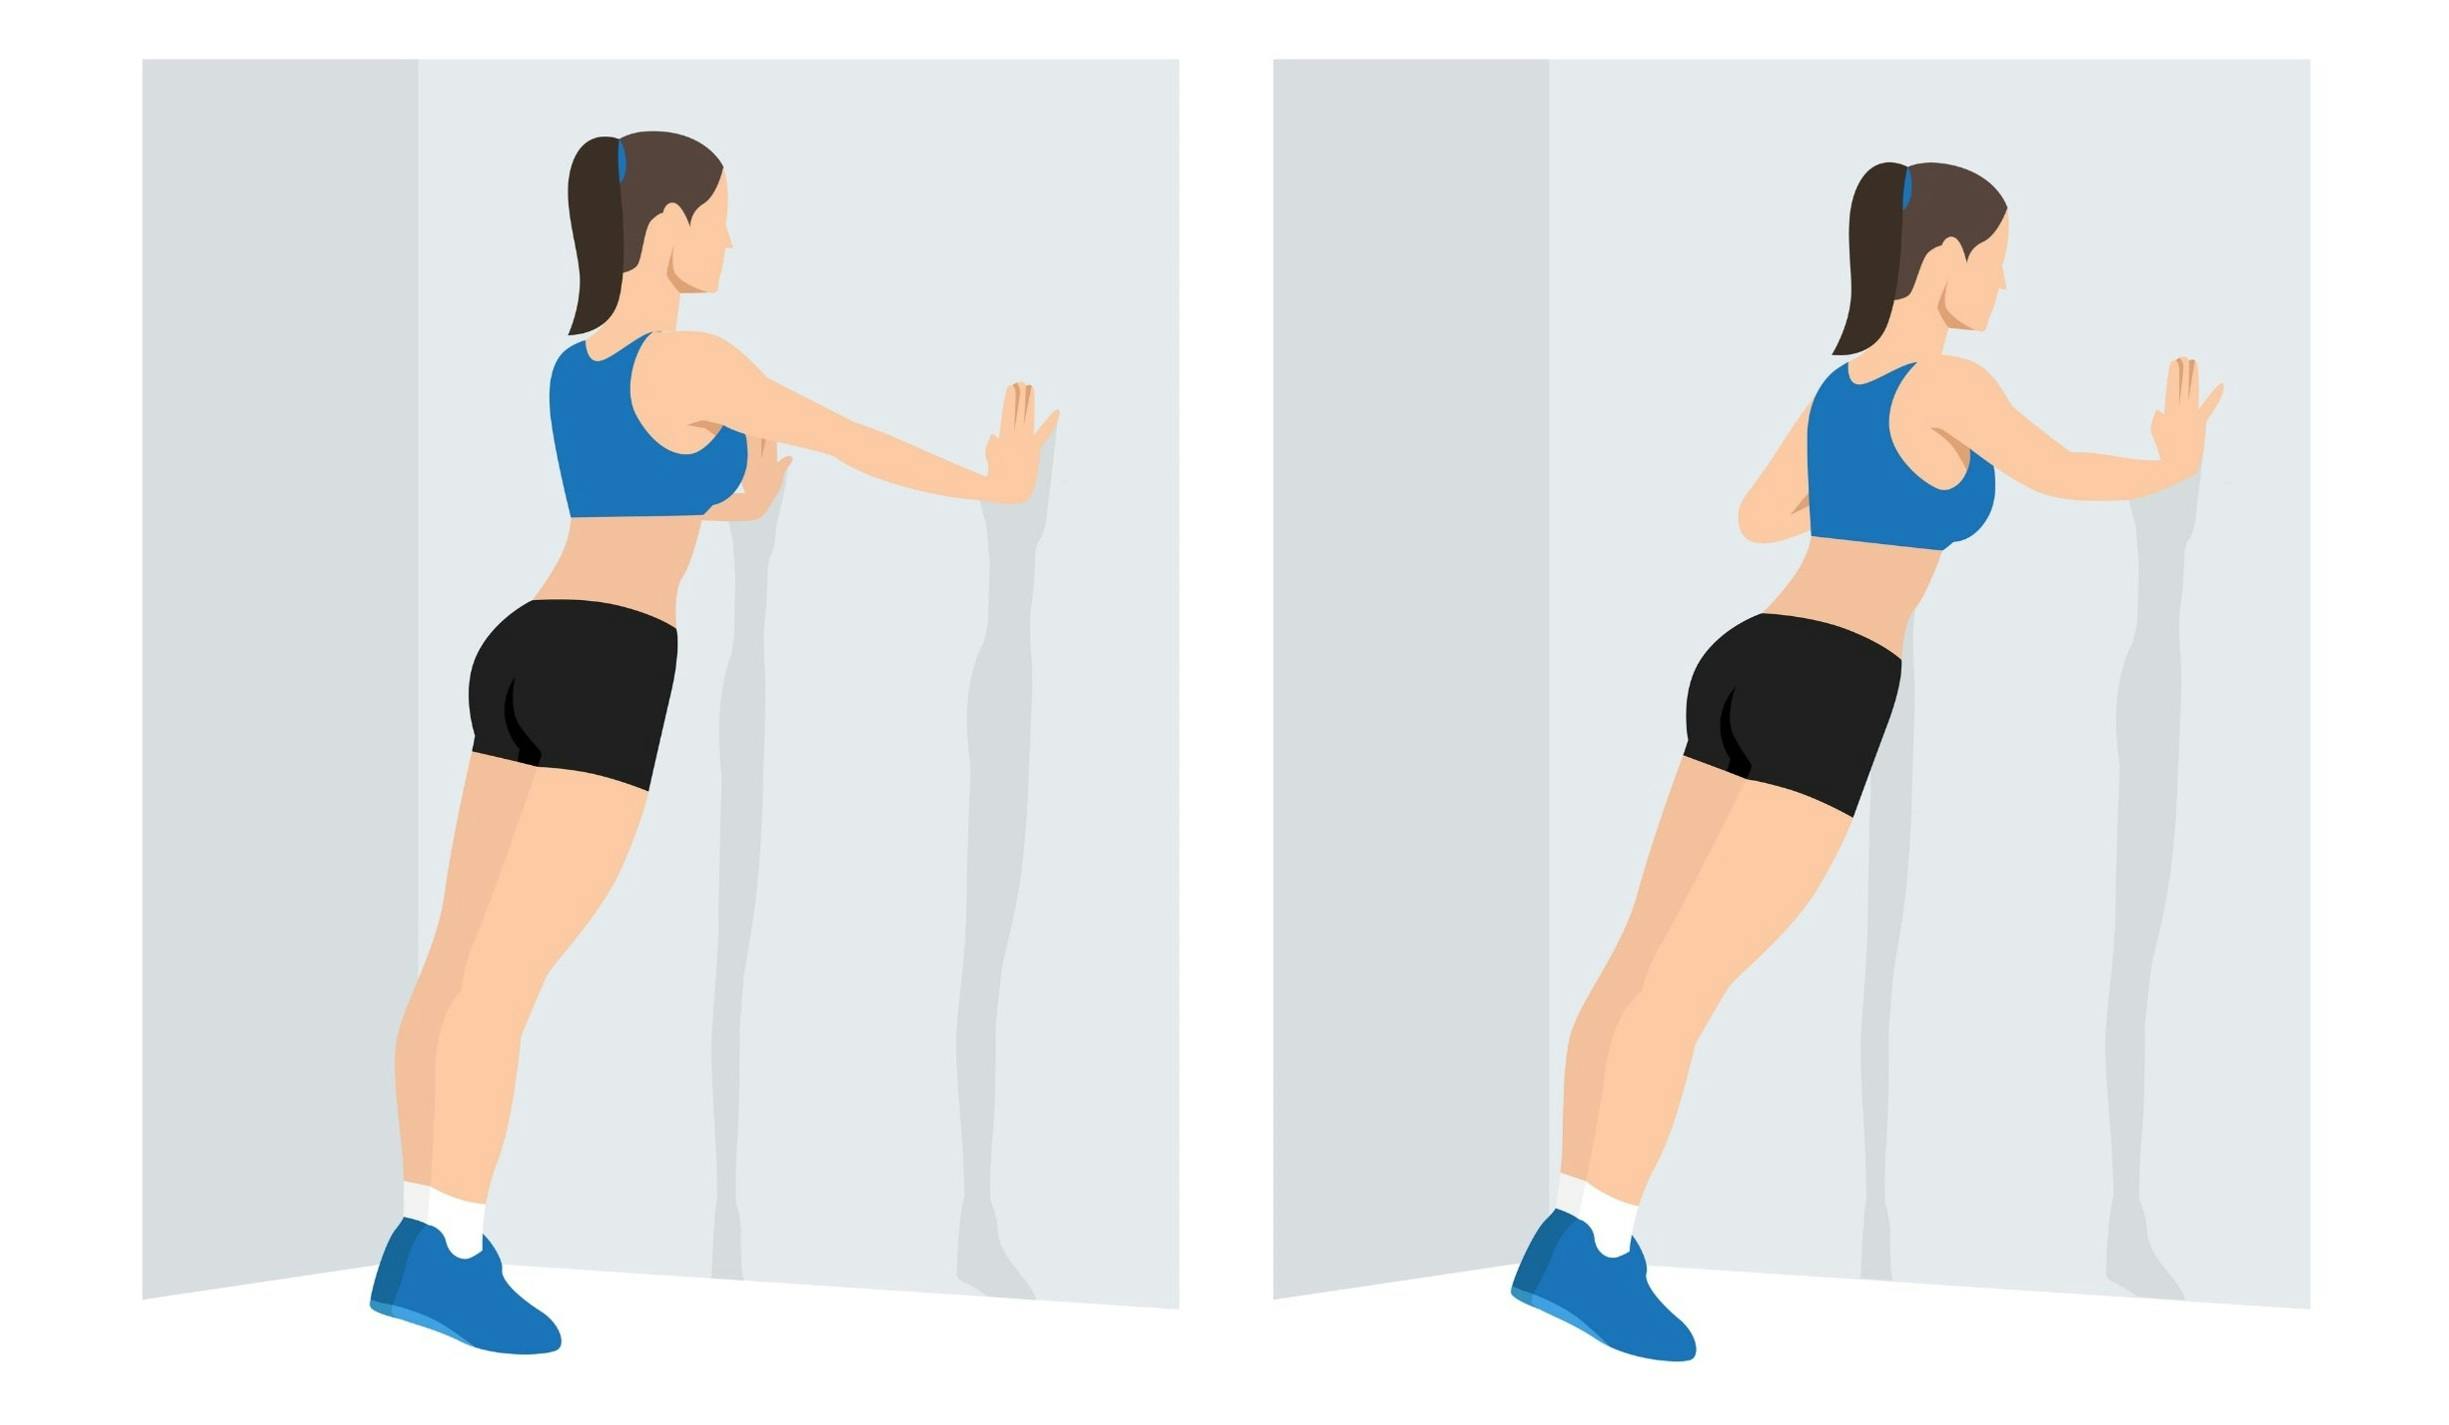 Wall pushup exercise illustration